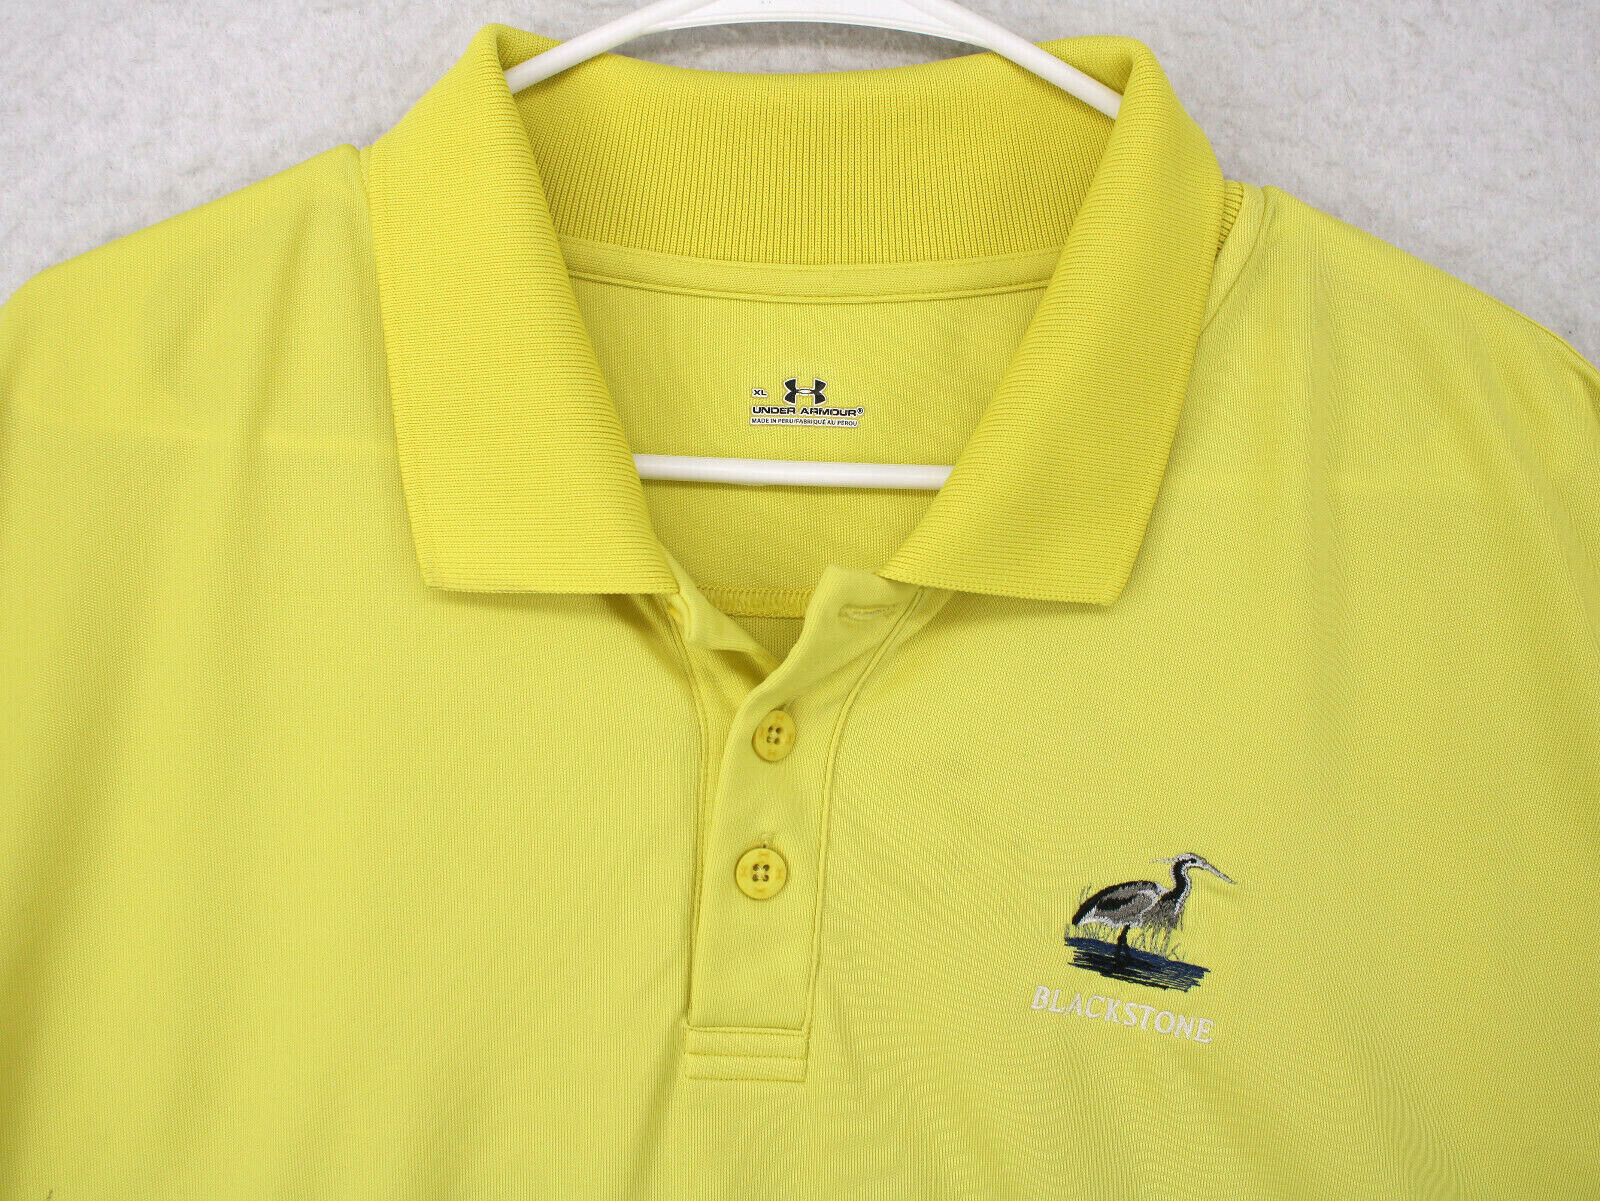 UNDER ARMOUR BLACKSTONE NGC Yellow Short Sleeve Golf Polo Shirt Men\'s XL